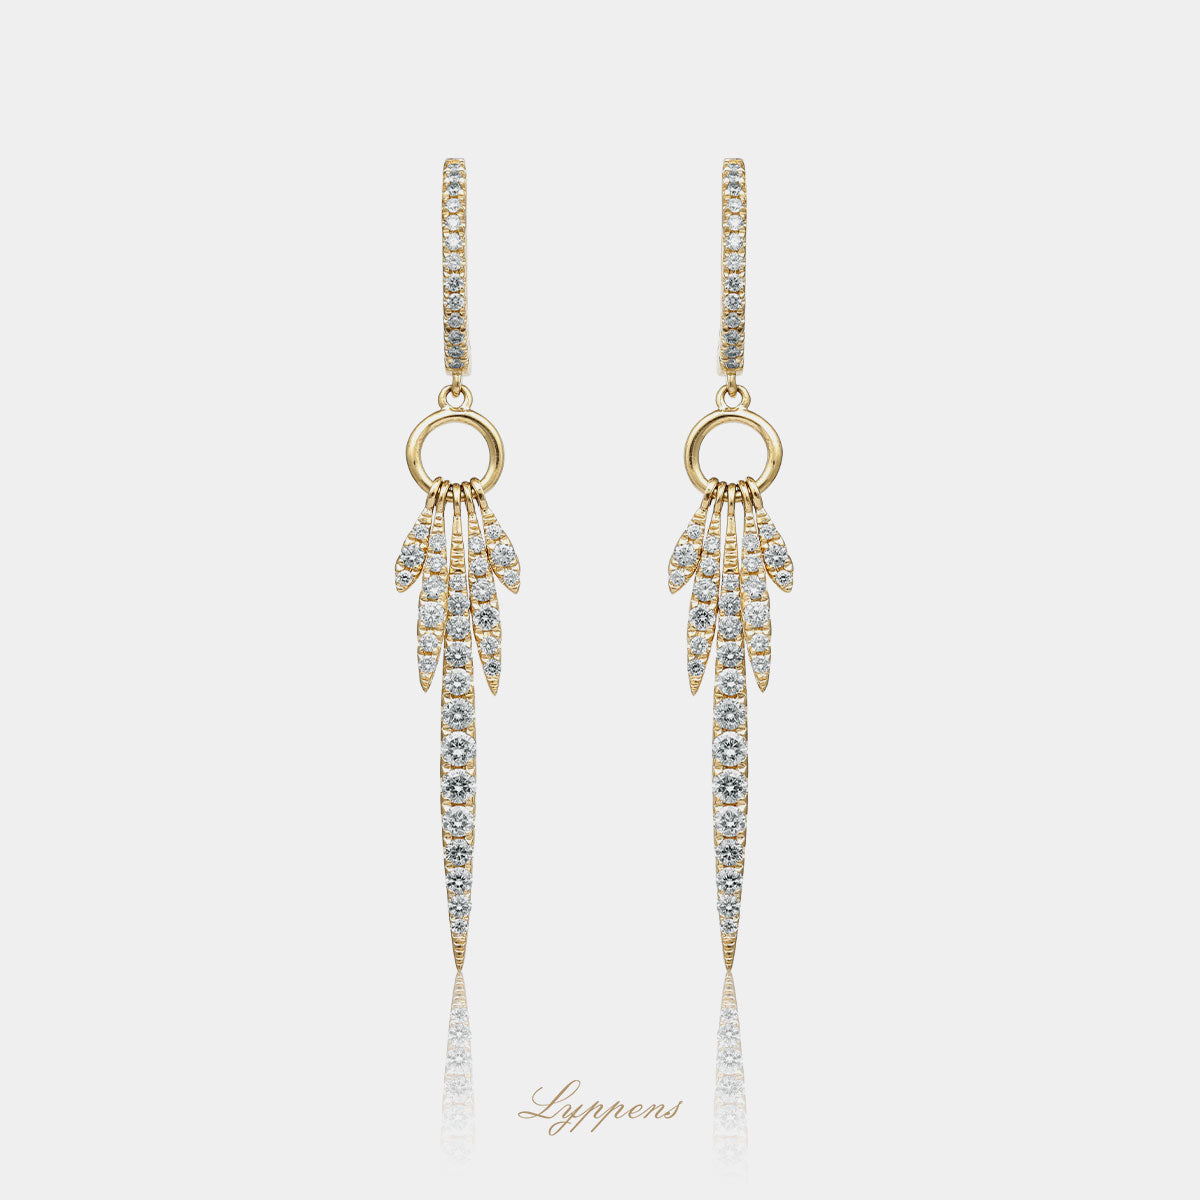 Yellow gold earrings with diamonds